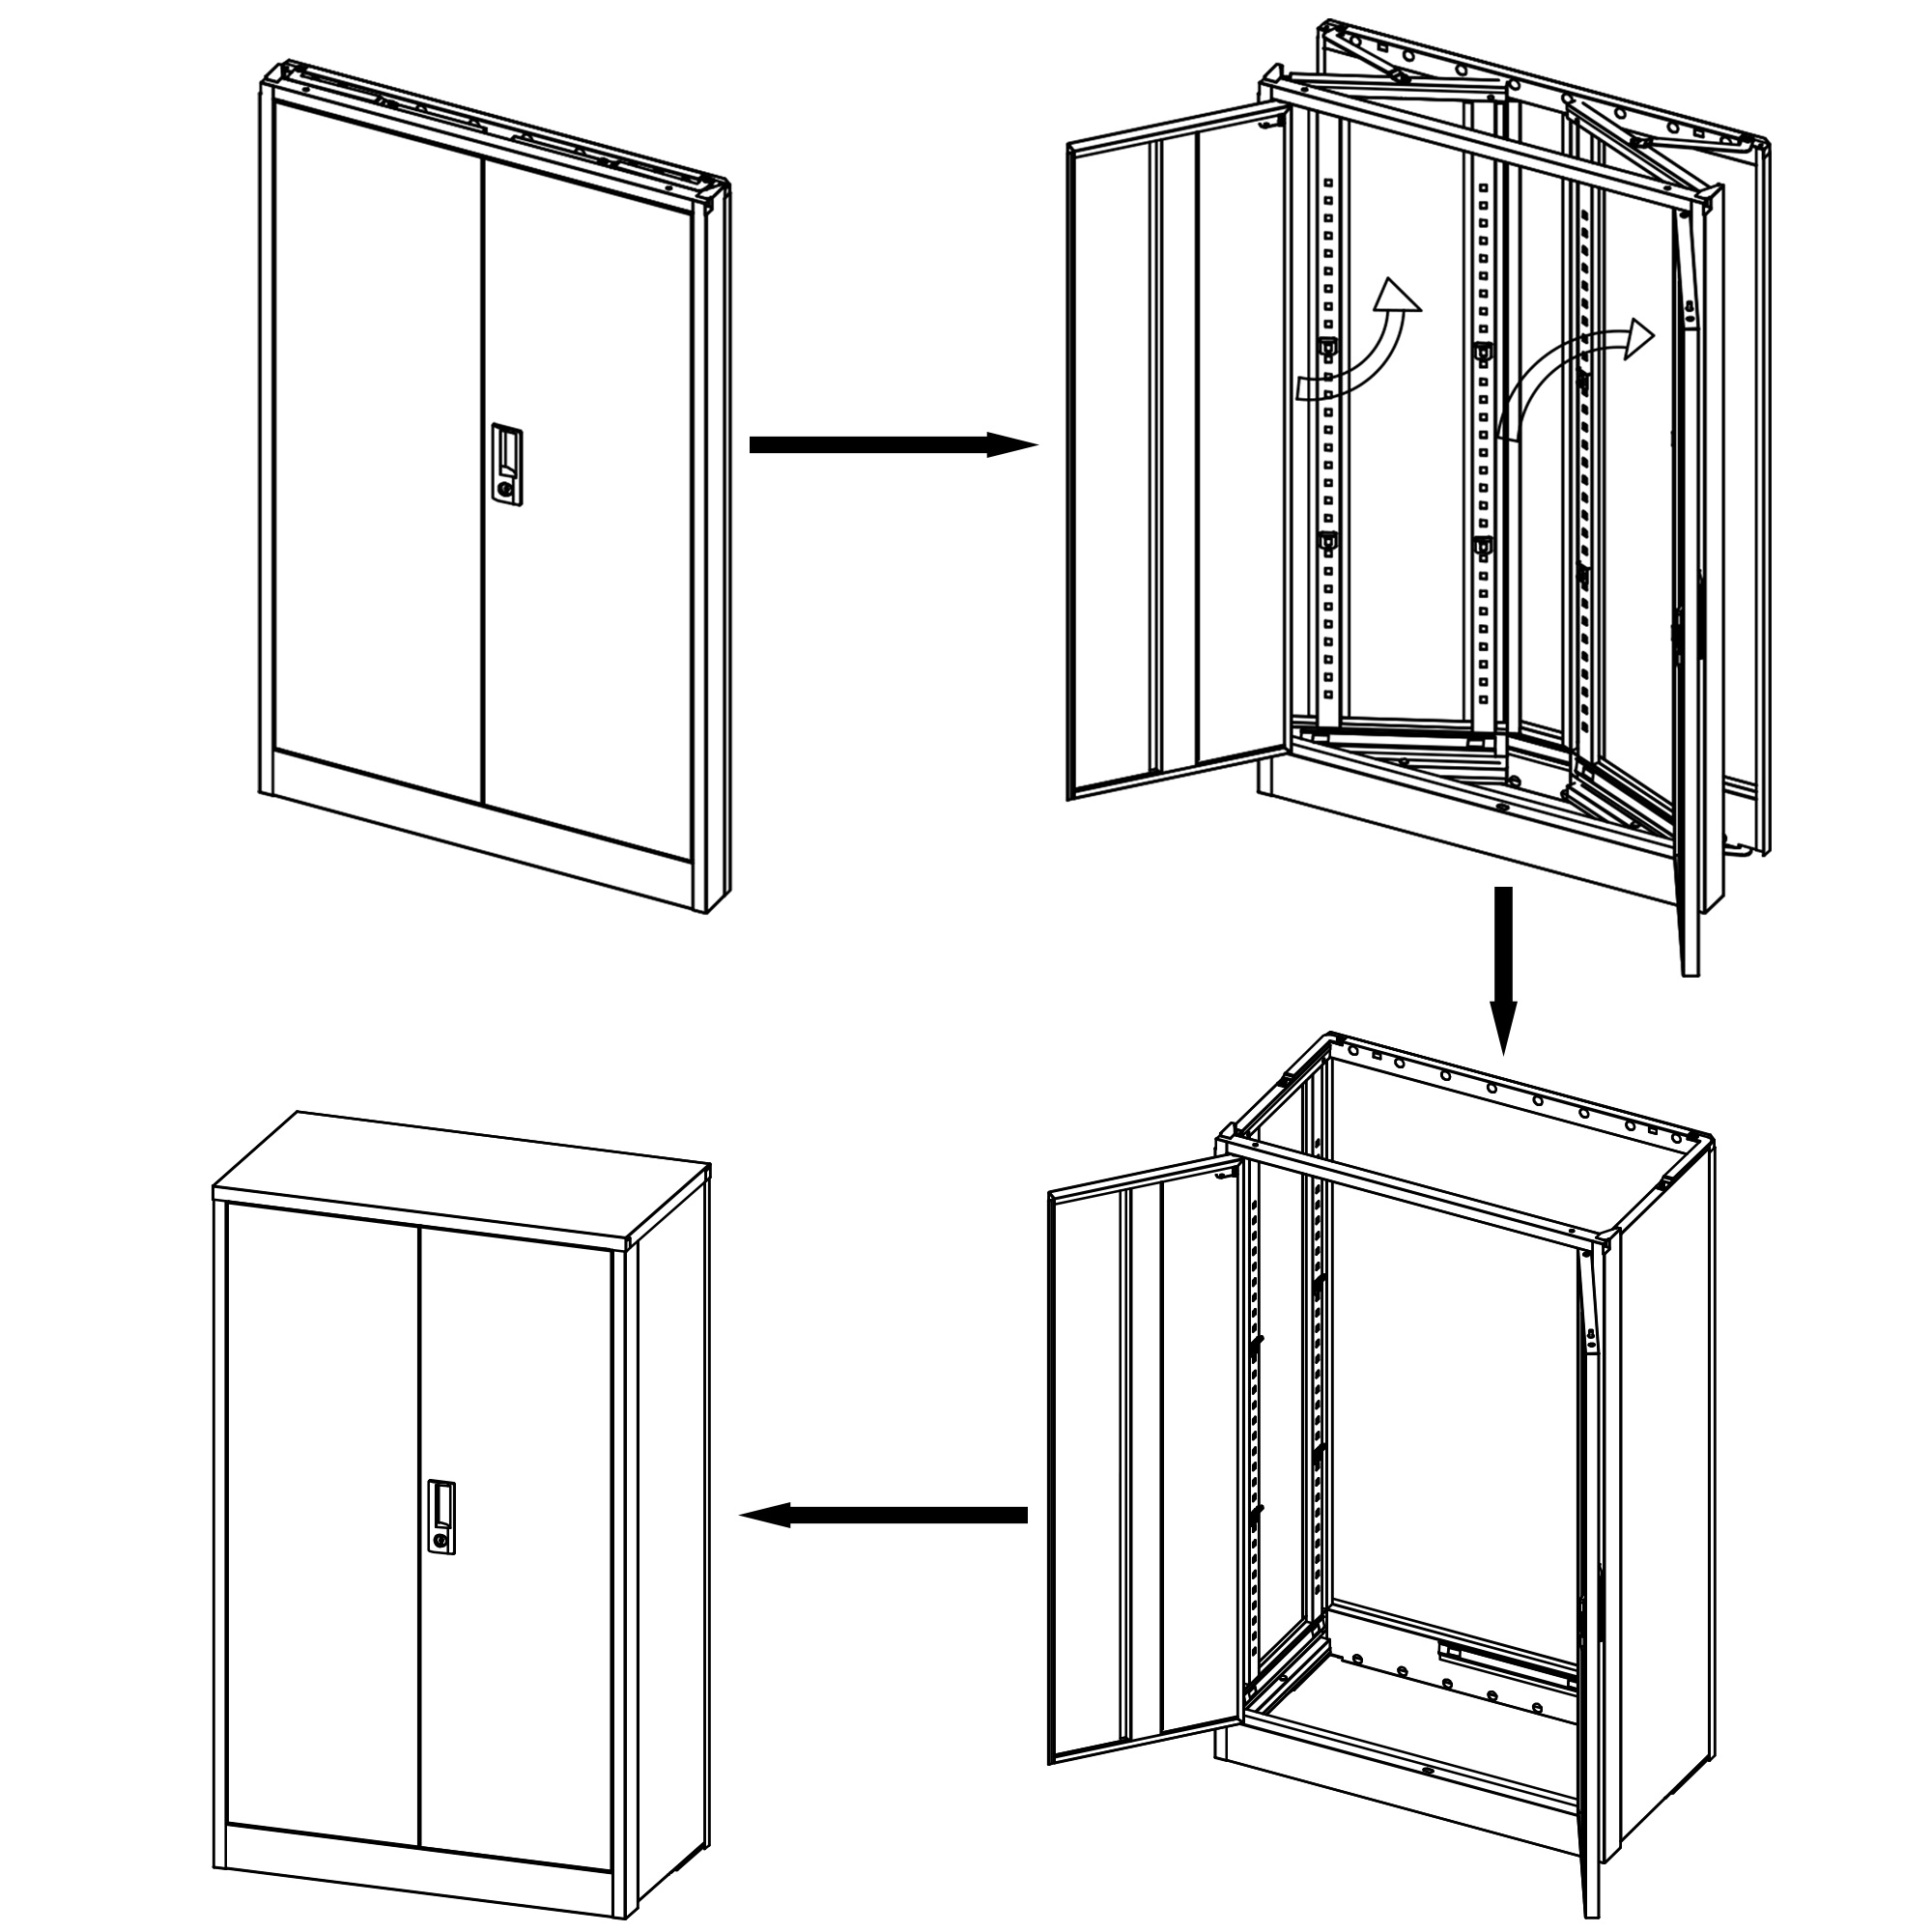 Metal Storage Cabinet with Locking Doors and Adjustable Shelf,Folding Filing Storage Cabinet,Rolling Storage Locker Cabinet for Home Office,School,Black - image 2 of 5